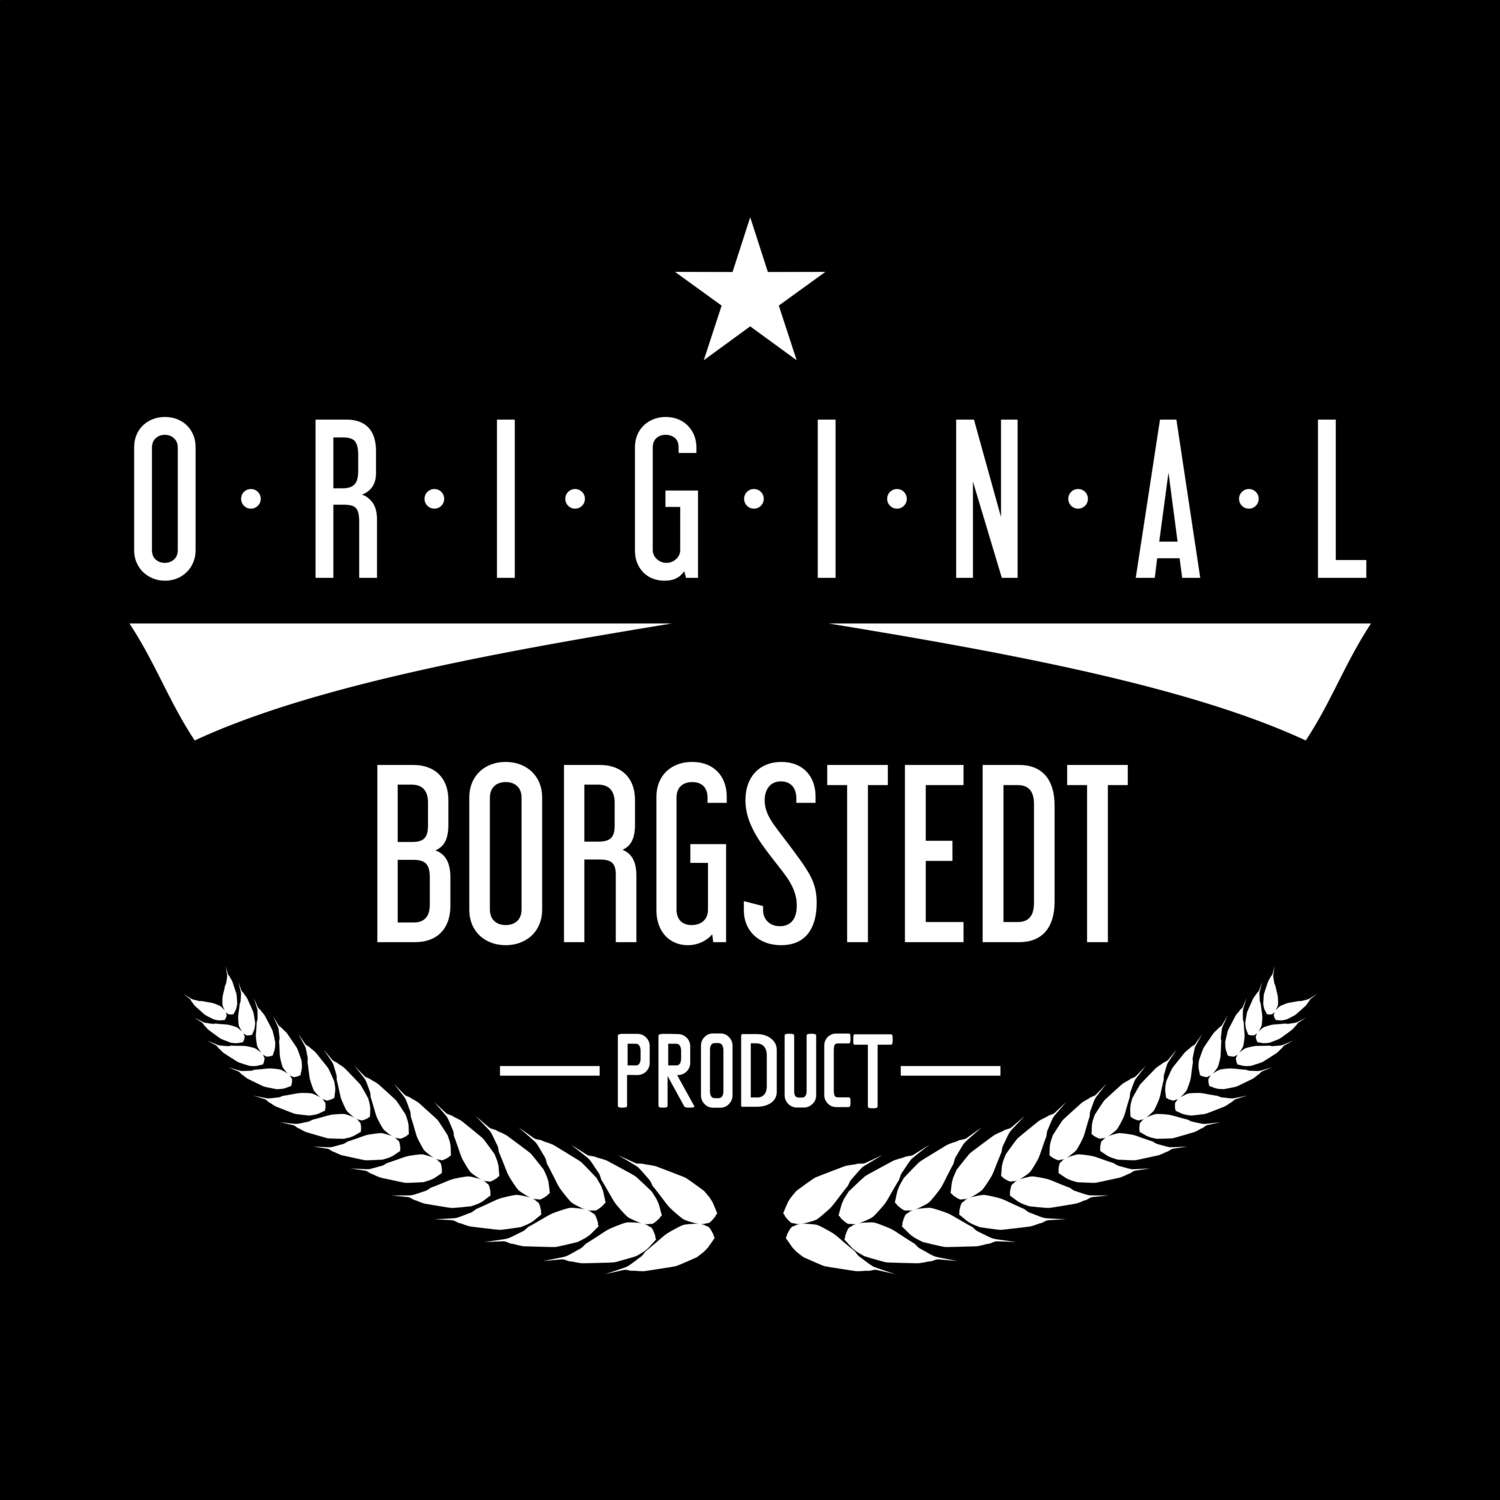 Borgstedt T-Shirt »Original Product«